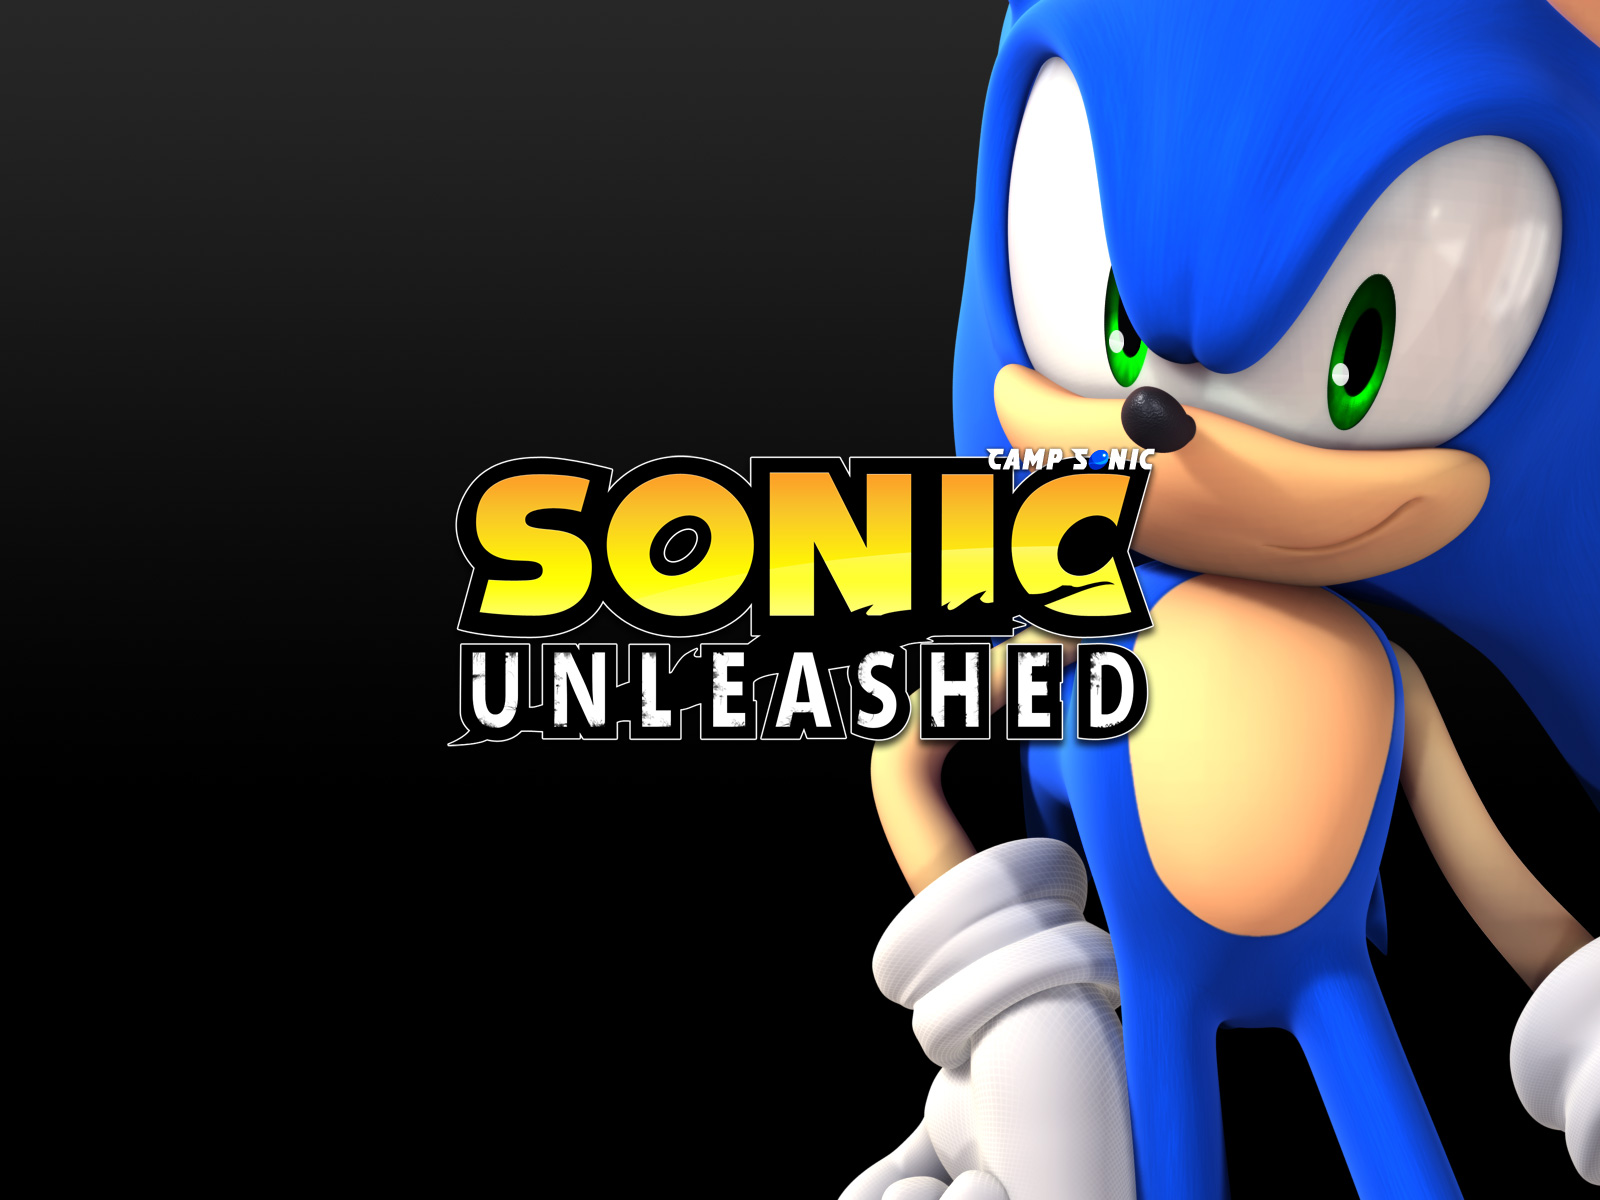 Sonic endless. Картинки Sonic unleashed. Sonic unleashed logo. Соник эмоции. Endless possibility Sonic unleashed.